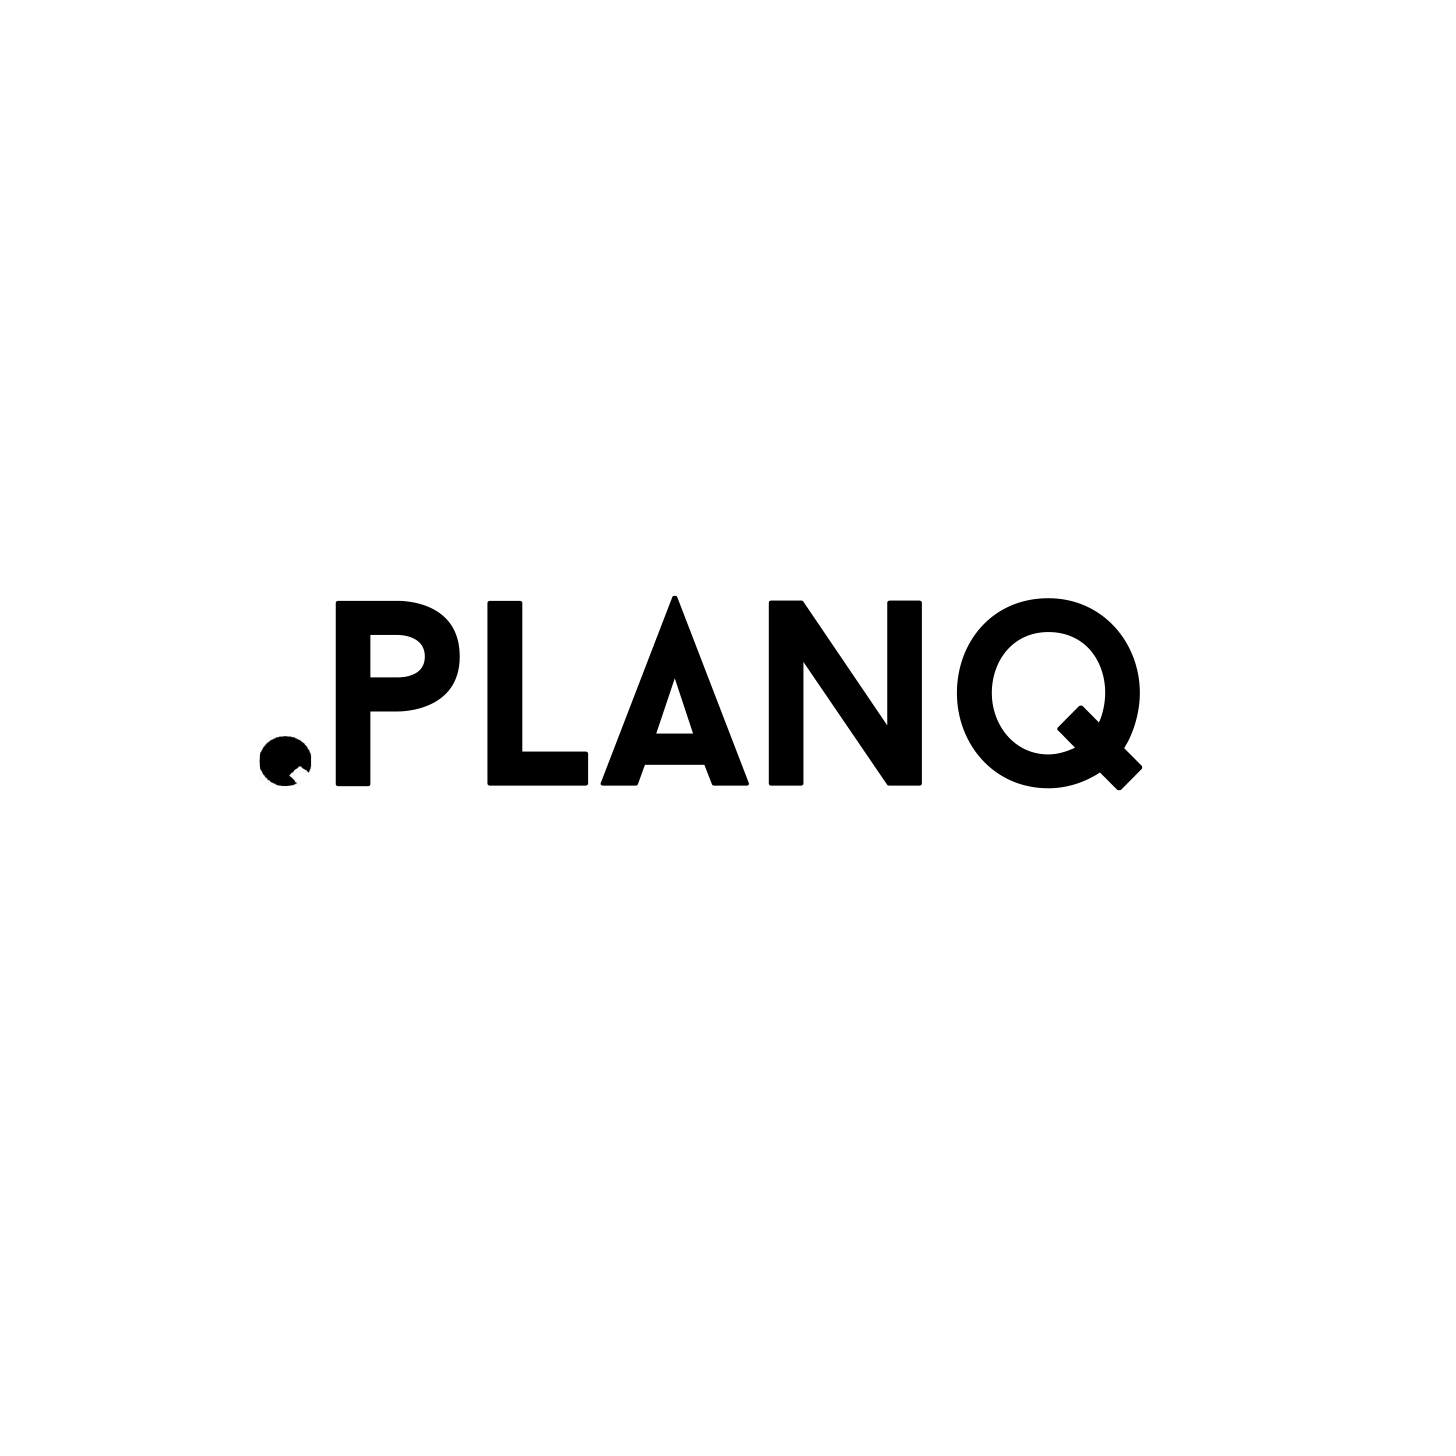 Planq